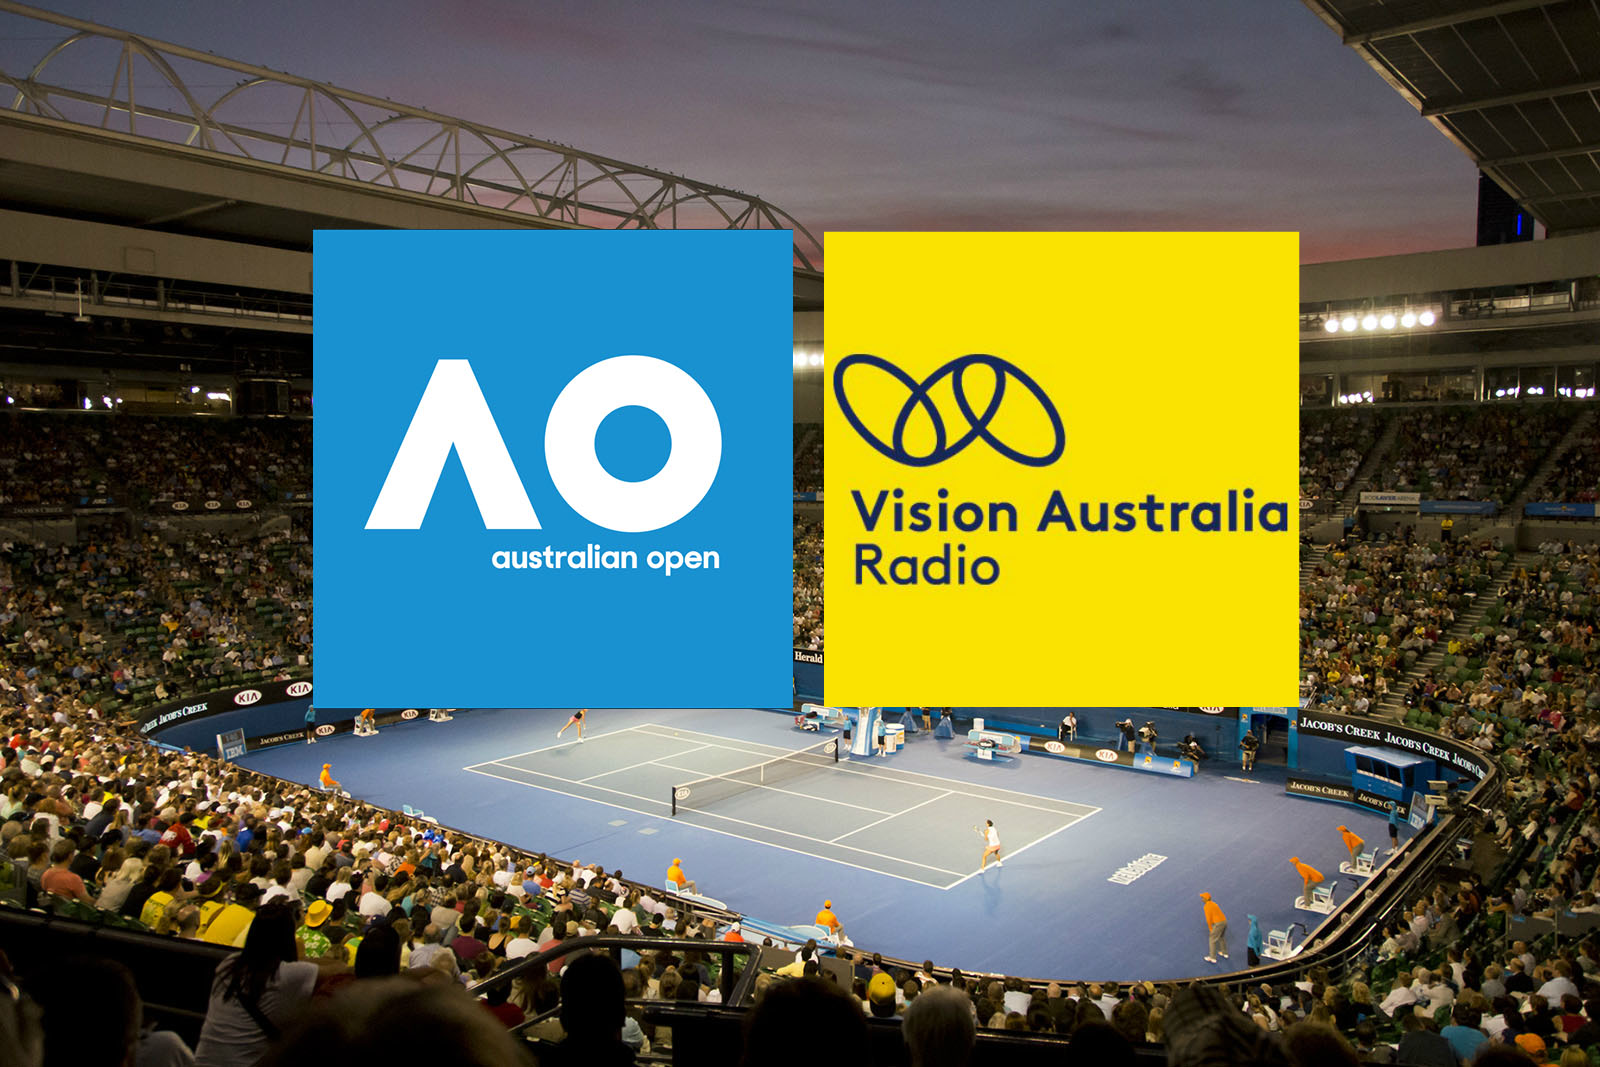 The Australian Open Grand Slam is live across Vision Australia Radio